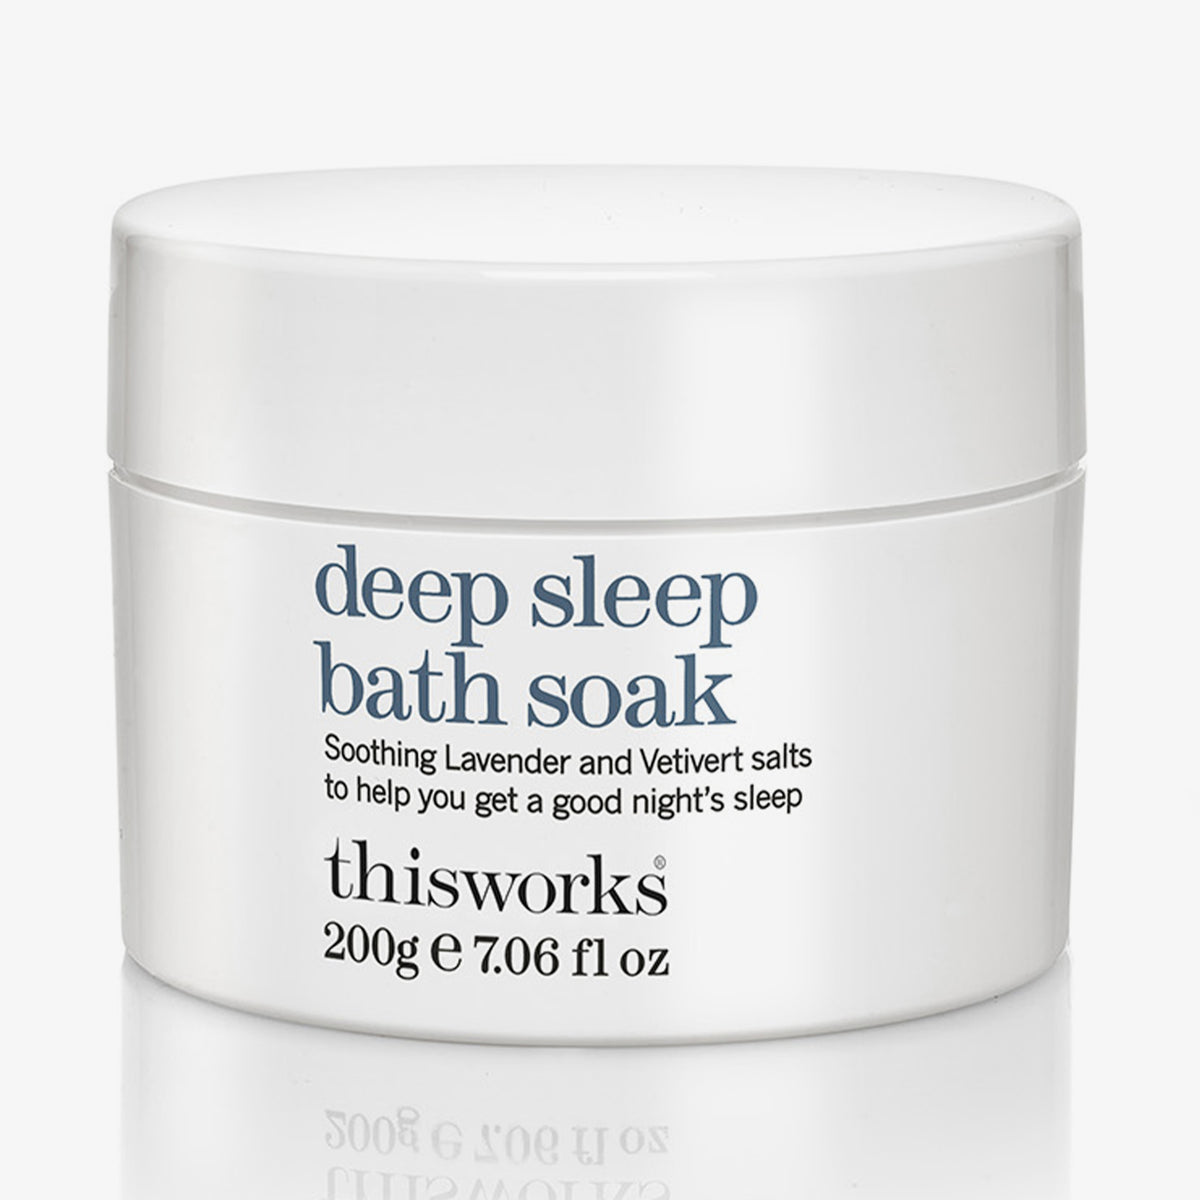 This Works | Deep Sleep Bath Soak